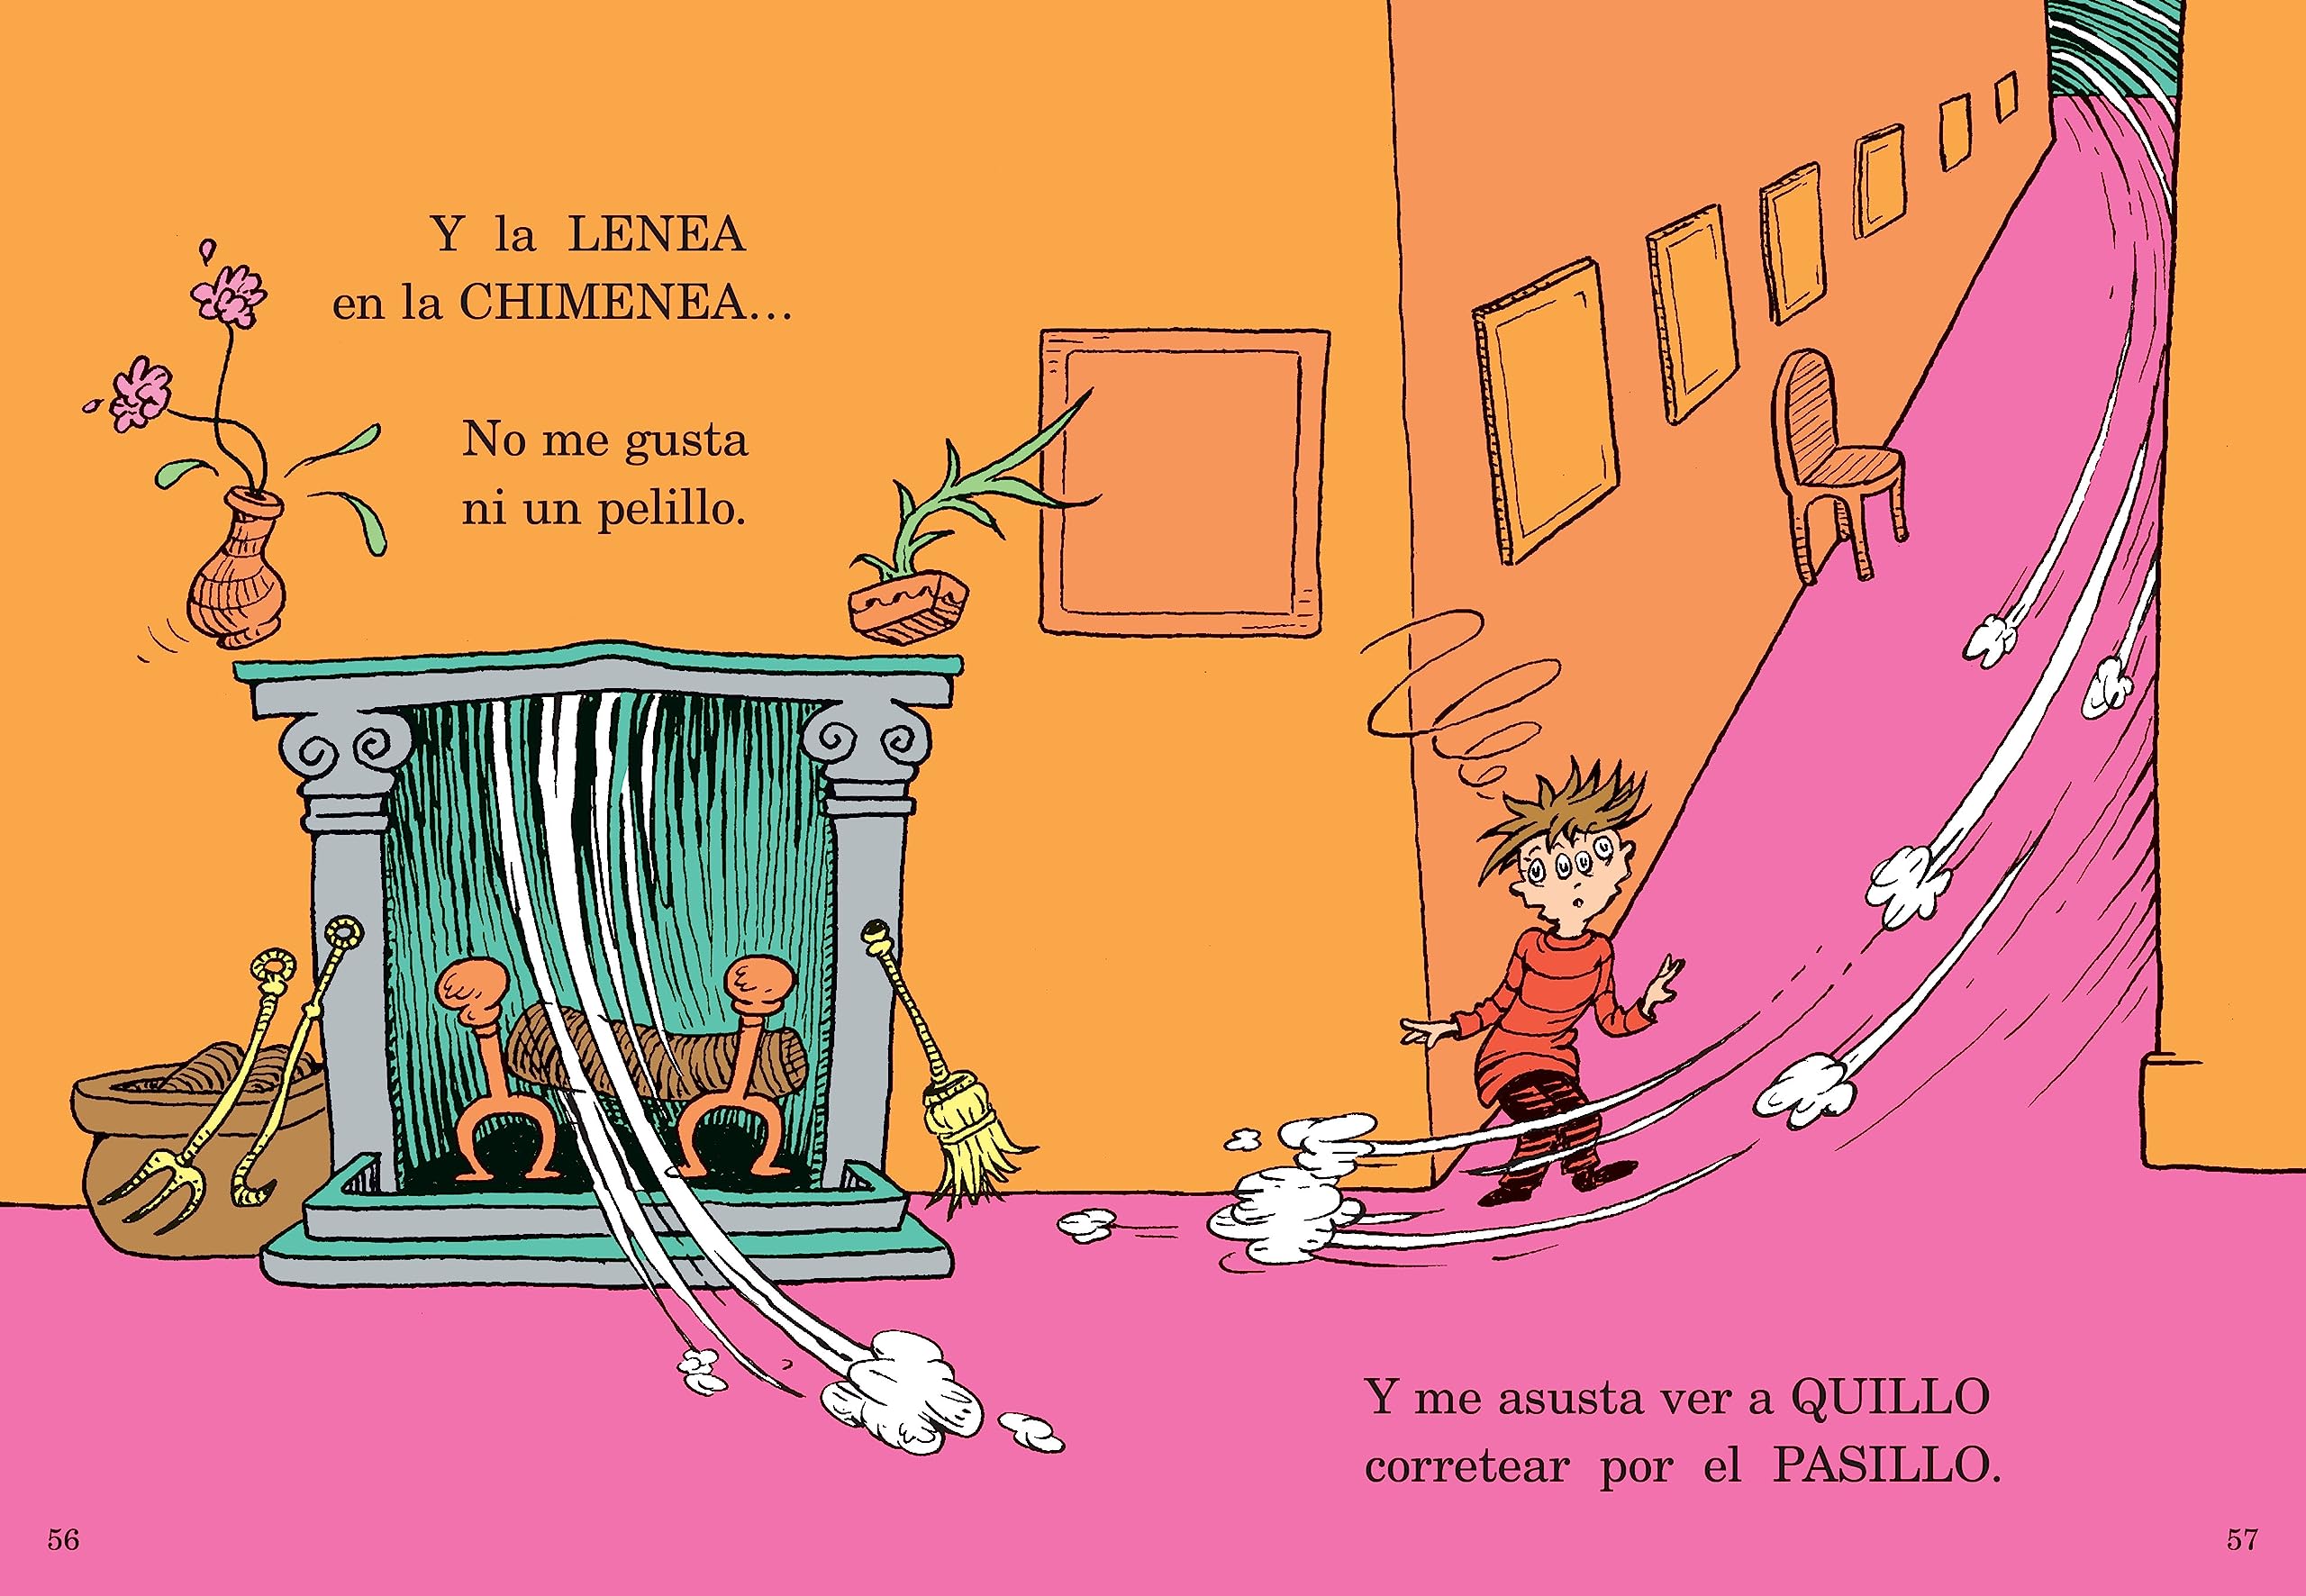 El gran libro de Beginner Books en español de Dr. Seuss (The Big Book of Beginner Books by Dr. Seuss) (Beginner Books(R)) (Spanish Edition)